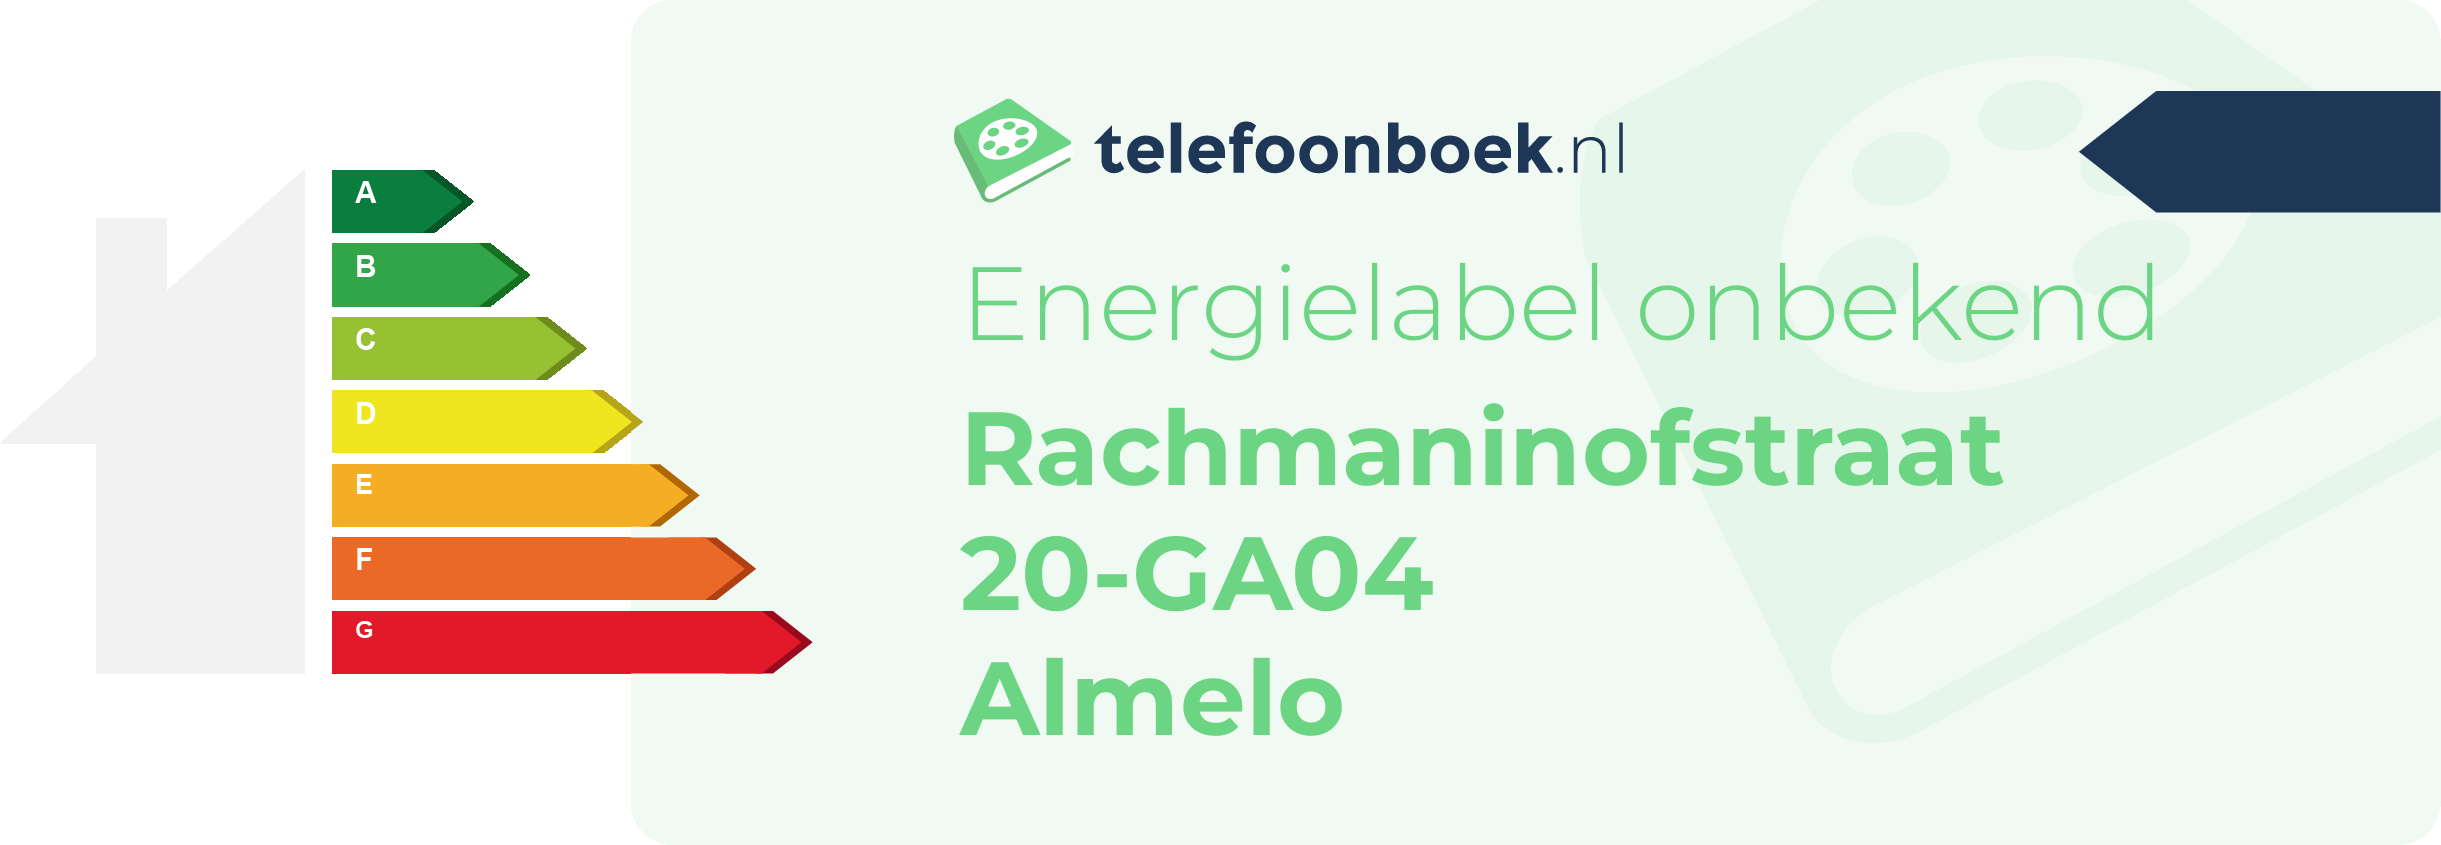 Energielabel Rachmaninofstraat 20-GA04 Almelo